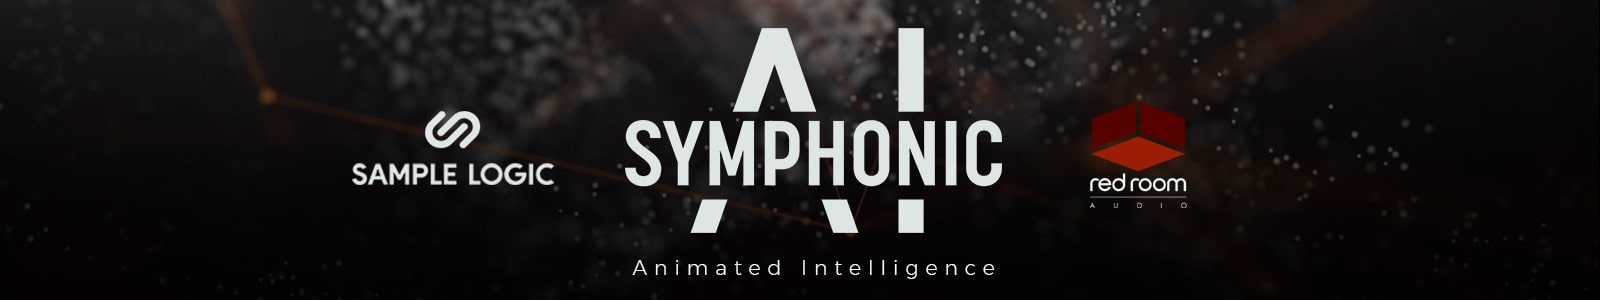 Sample Logic Symphonic AI